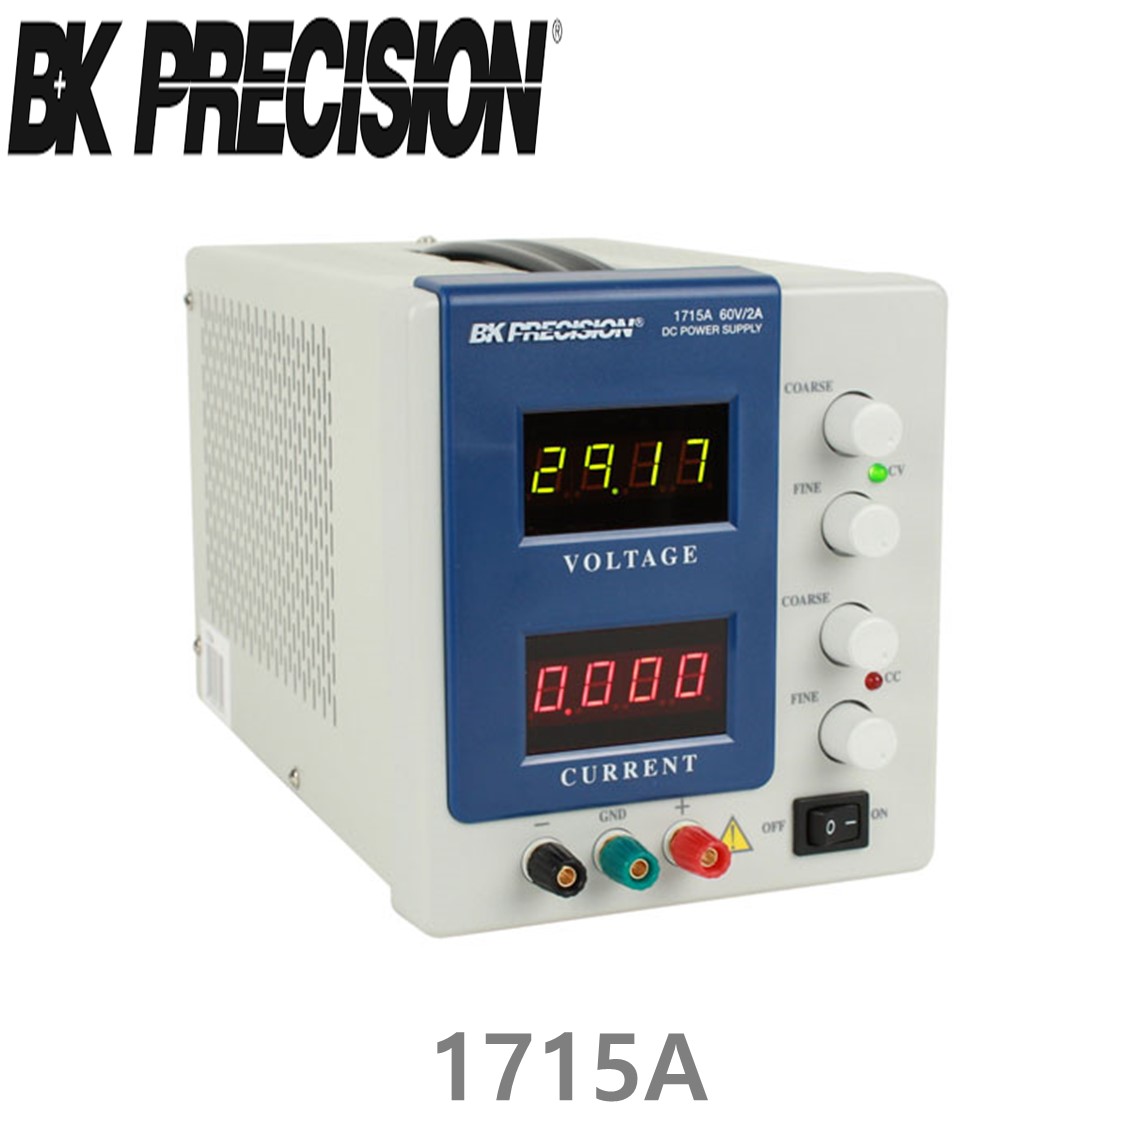 [ BK PRECISION ] BK 1715A, 60V/2A, DC Power Supply, 직류 전원공급기, B&K 1715A